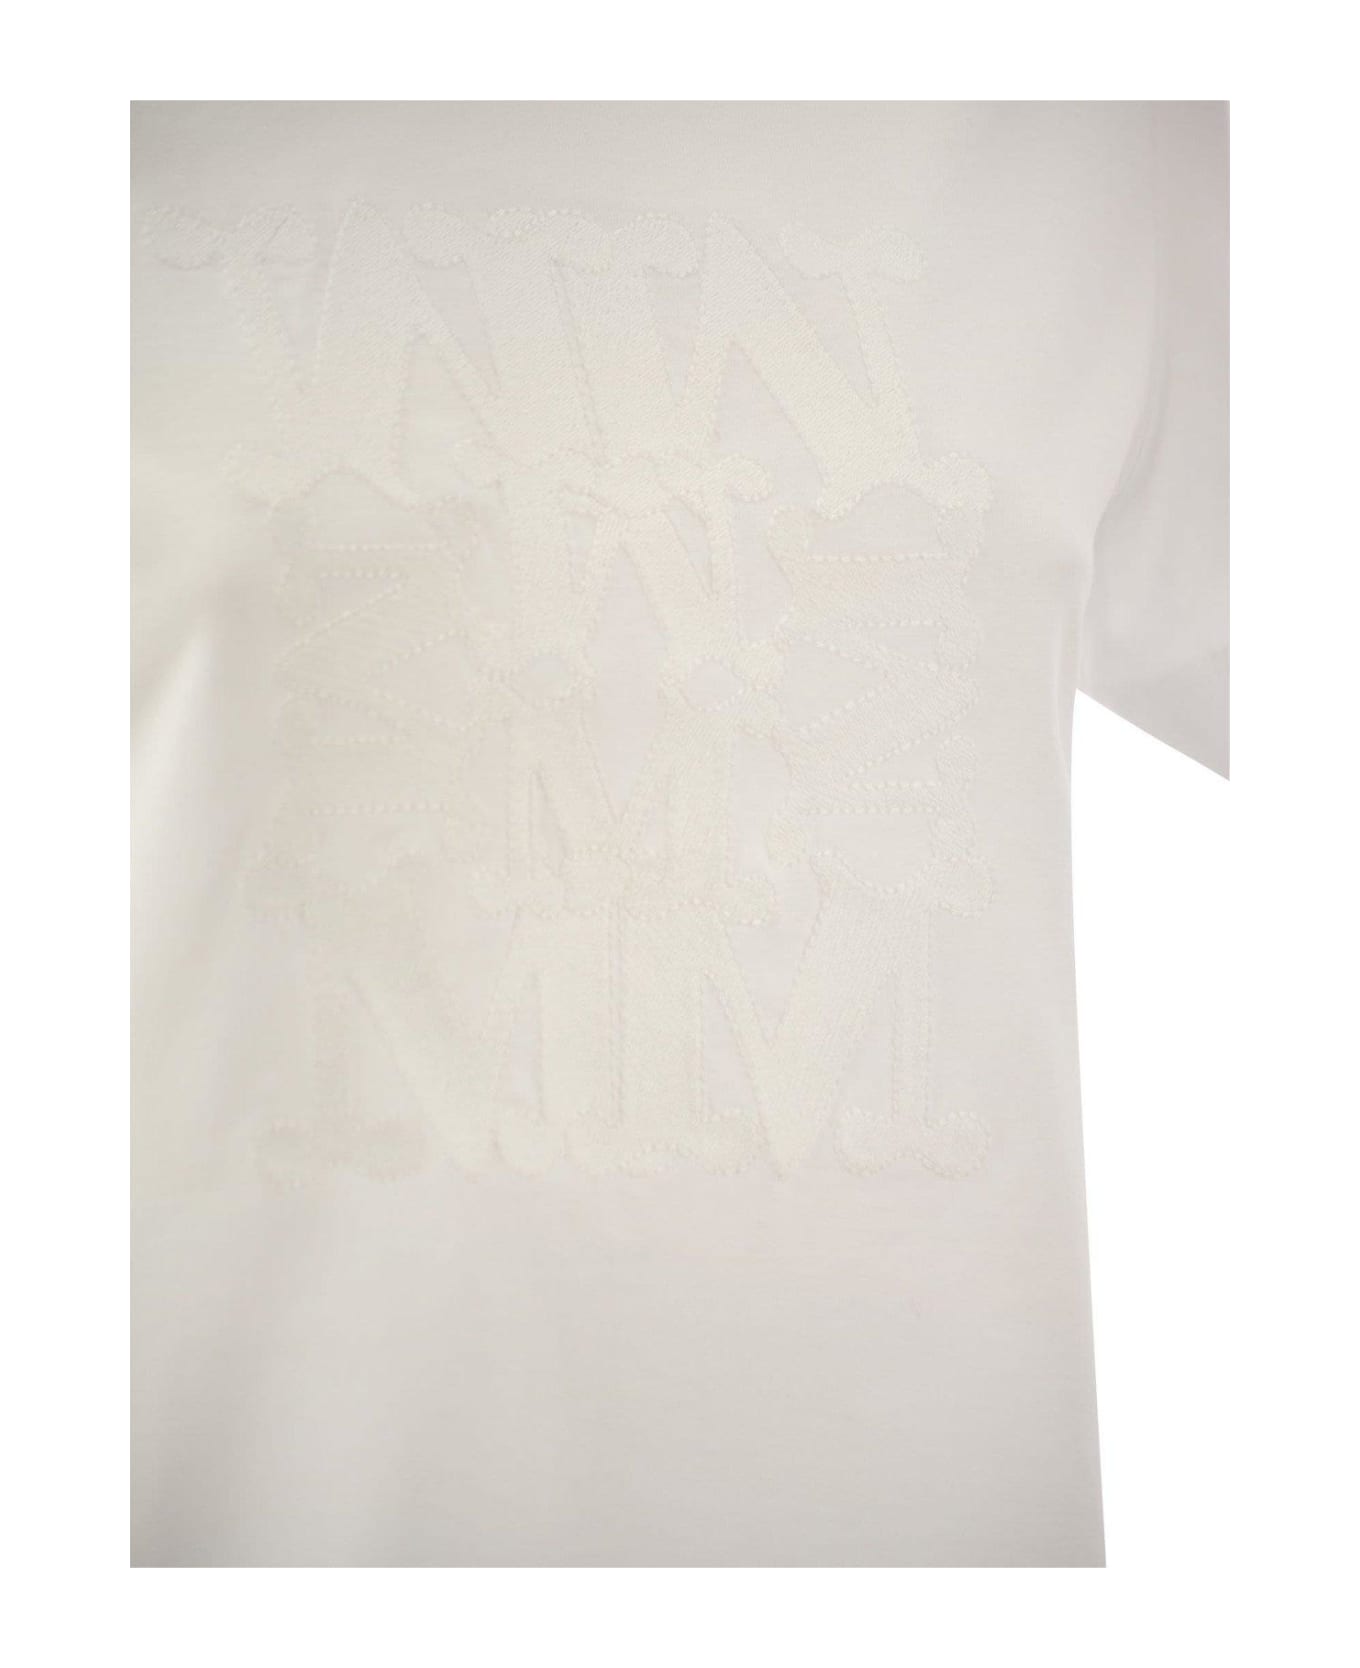 Max Mara Crewneck Short-sleeved T-shirt - Optic White